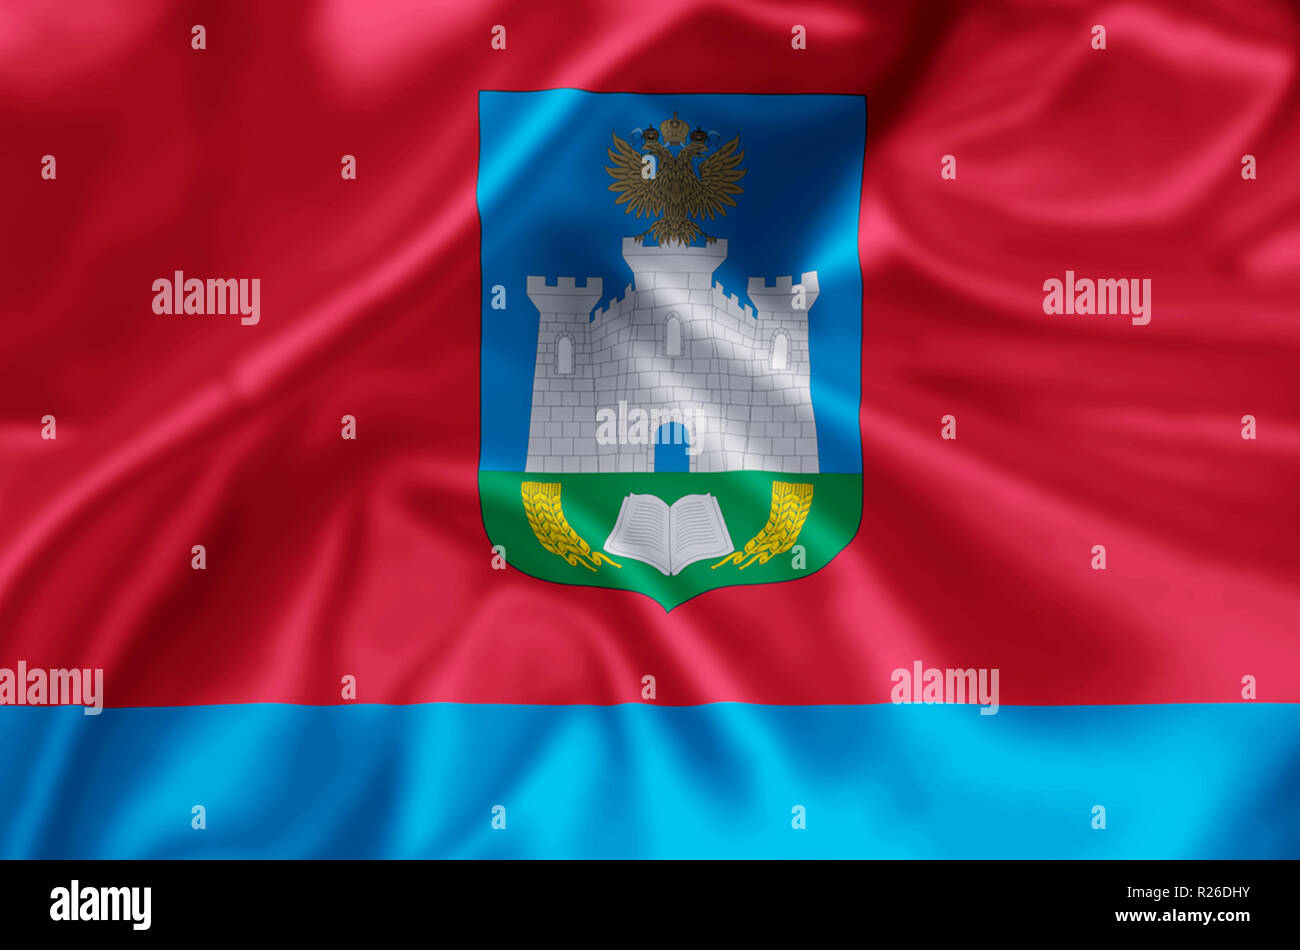 Oryol oblast flag, Russian Federation, vector illustration Stock